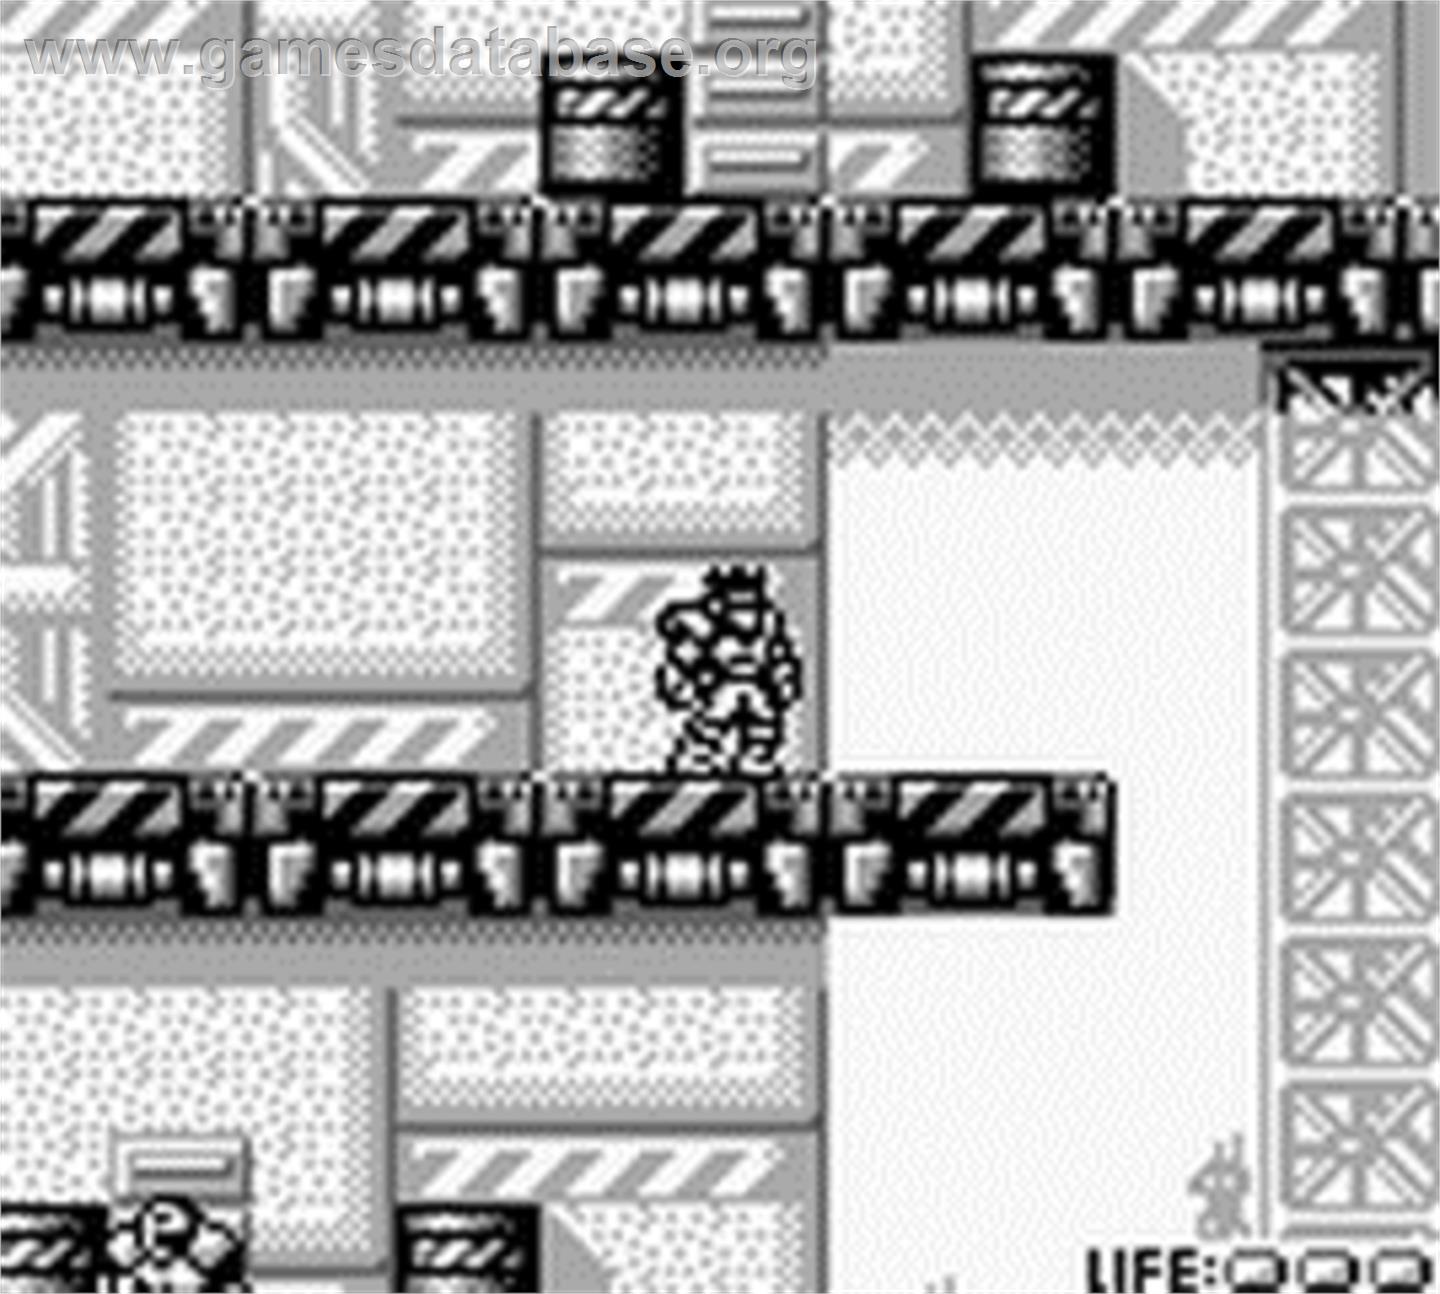 Bionic Commando - Nintendo Game Boy - Artwork - In Game